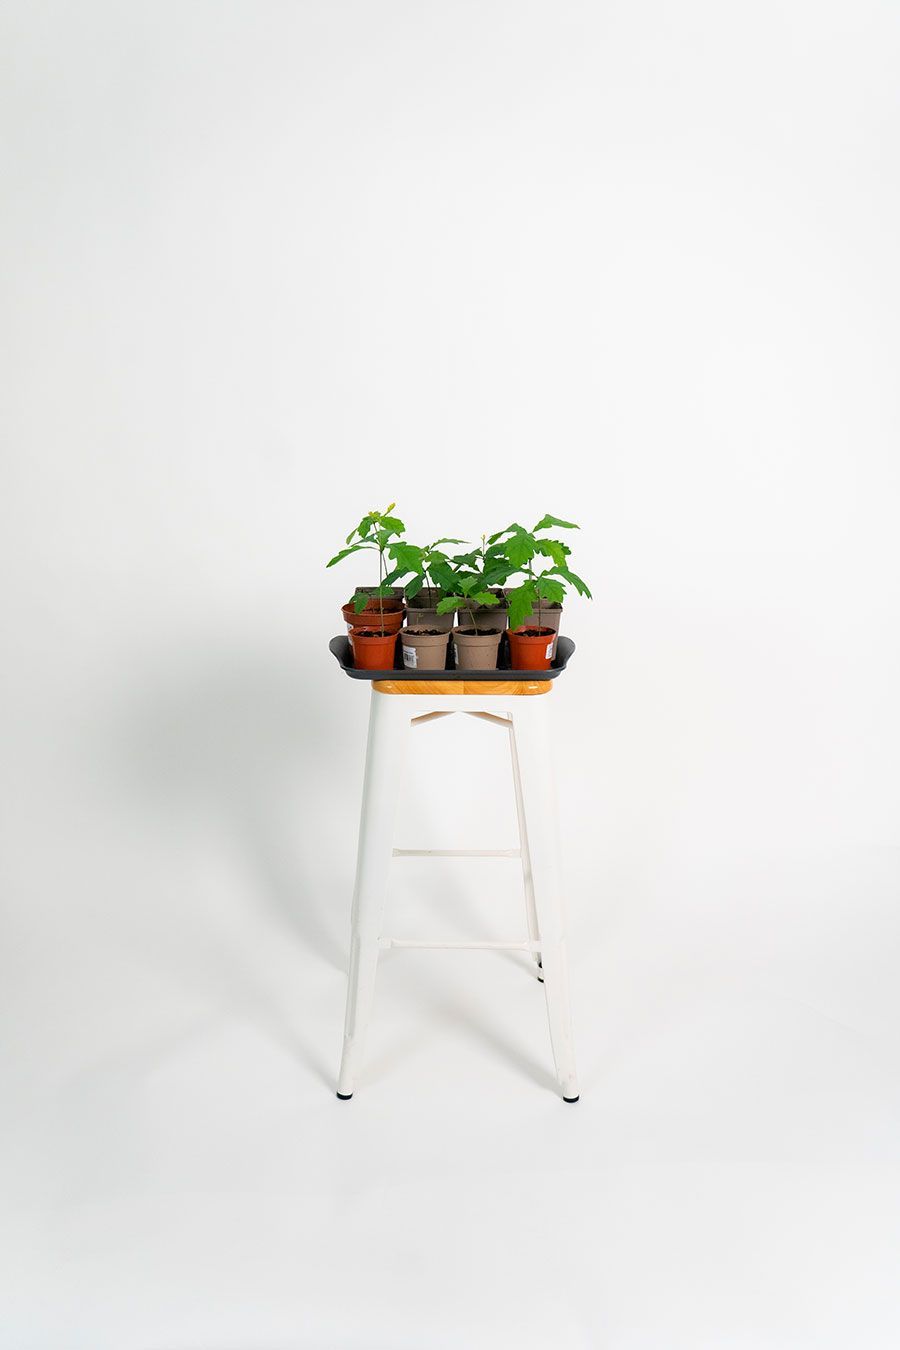 Photo of a stool with plants I Spontaneous application 